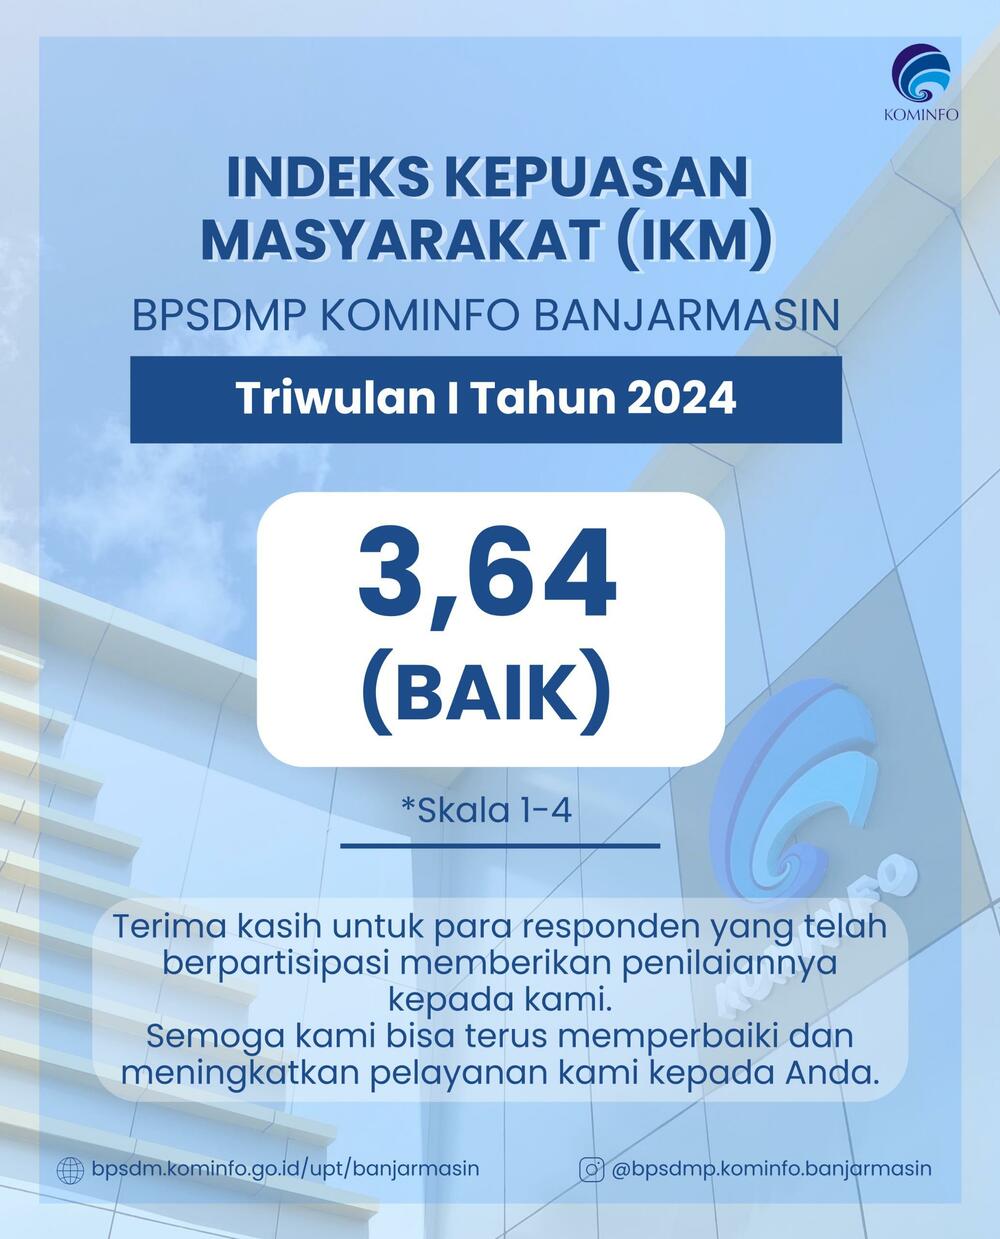 Gambar: Hasil Survey Indeks Kepuasan Masyarakat (IKM) BPSDMP Kominfo Banjarmasin Triwulan I Tahun 2024 